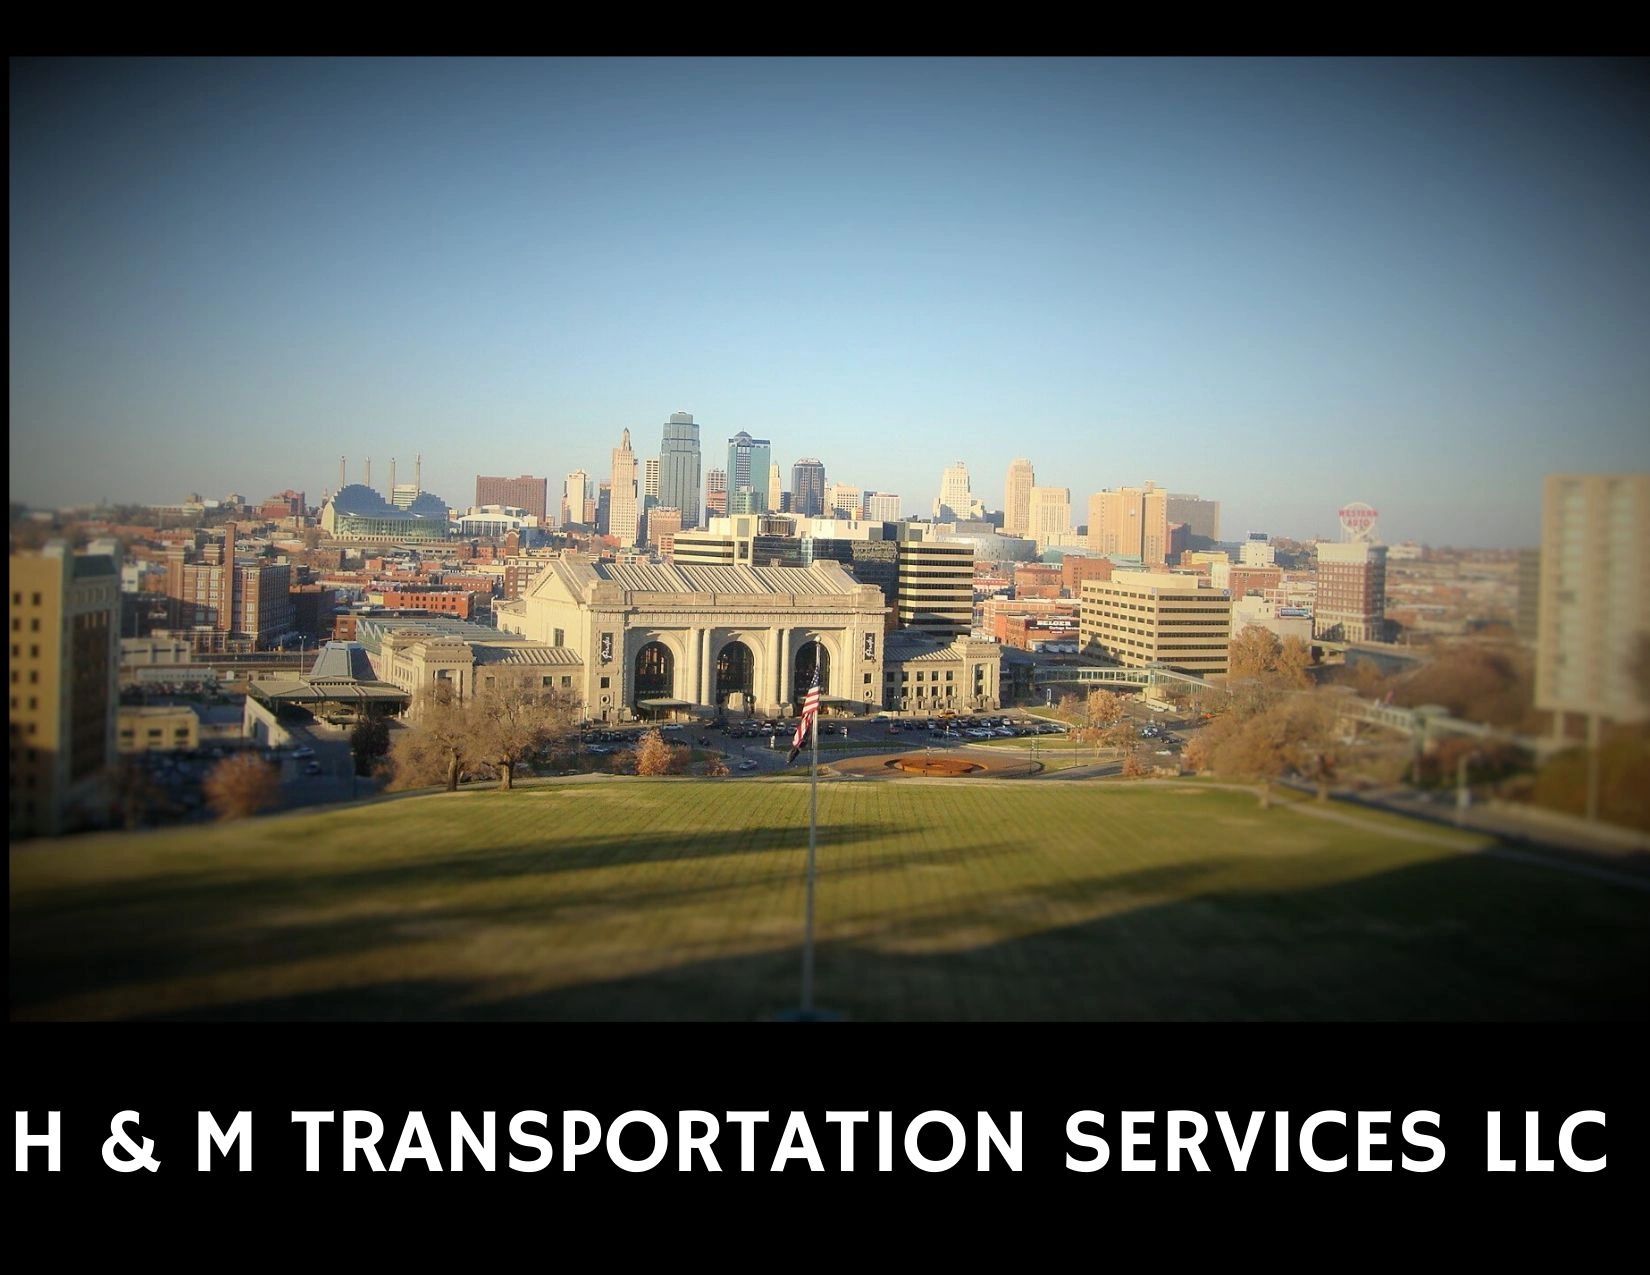 Black Car Service - H & M Transportation Services LLC